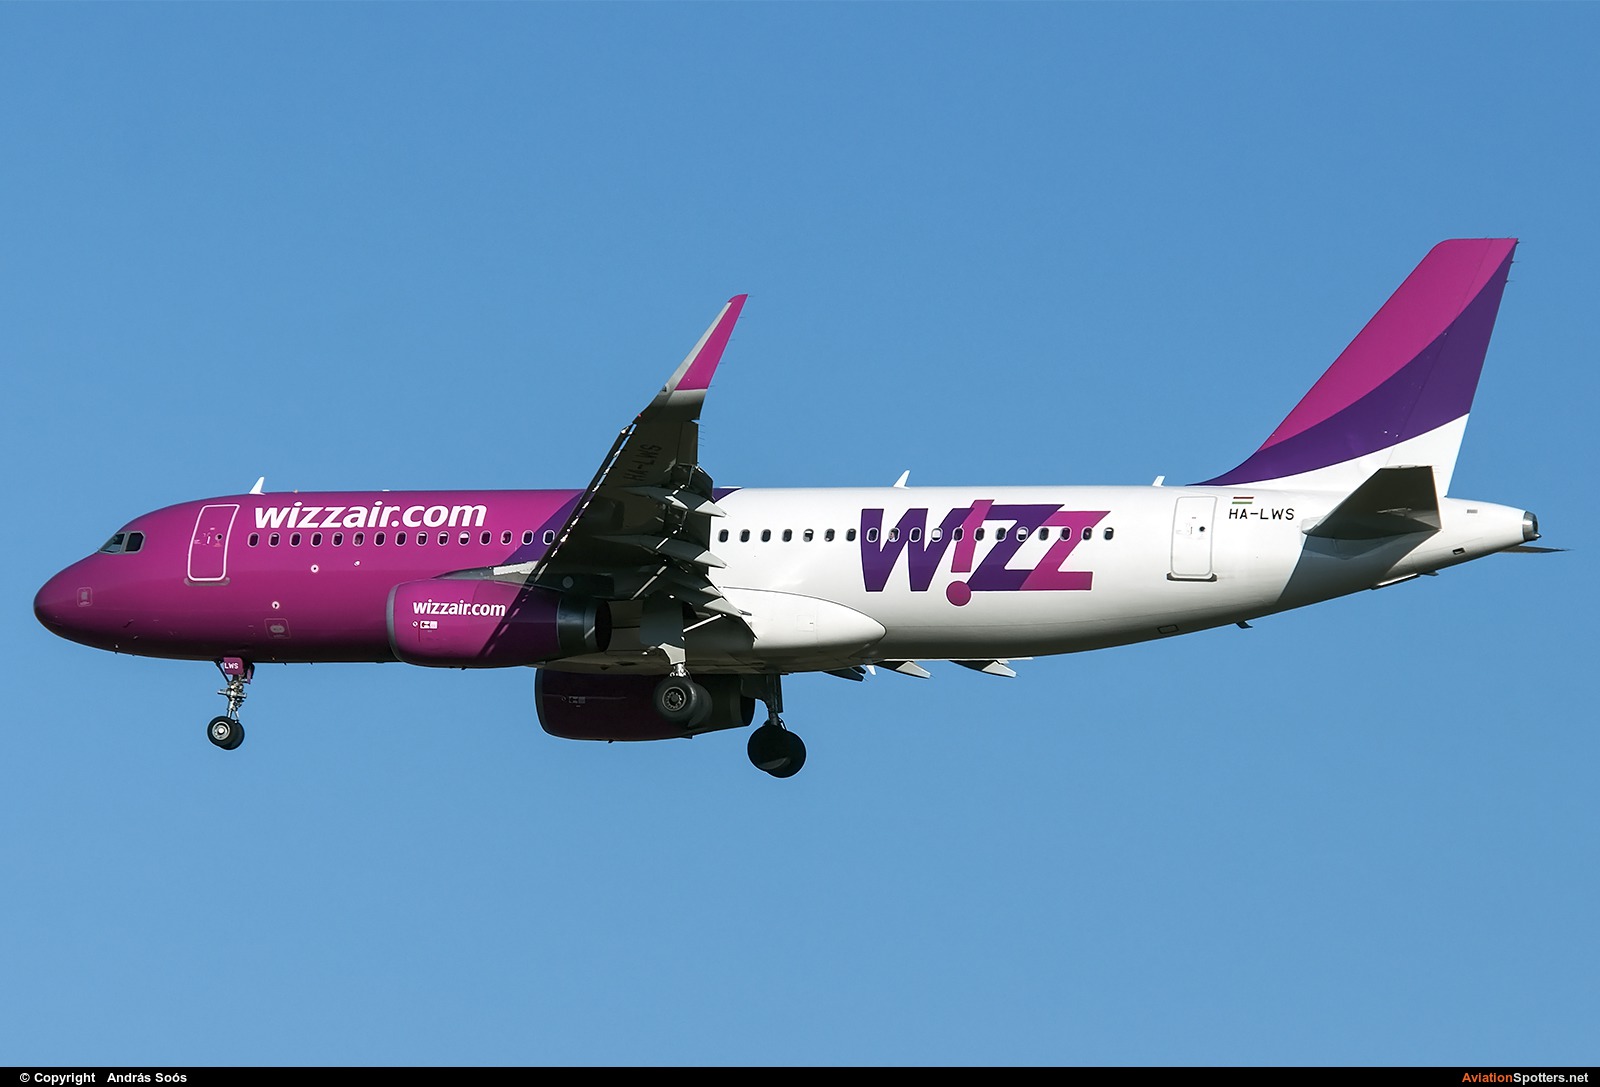 Wizz Air  -  A320  (HA-LWS) By András Soós (sas1965)